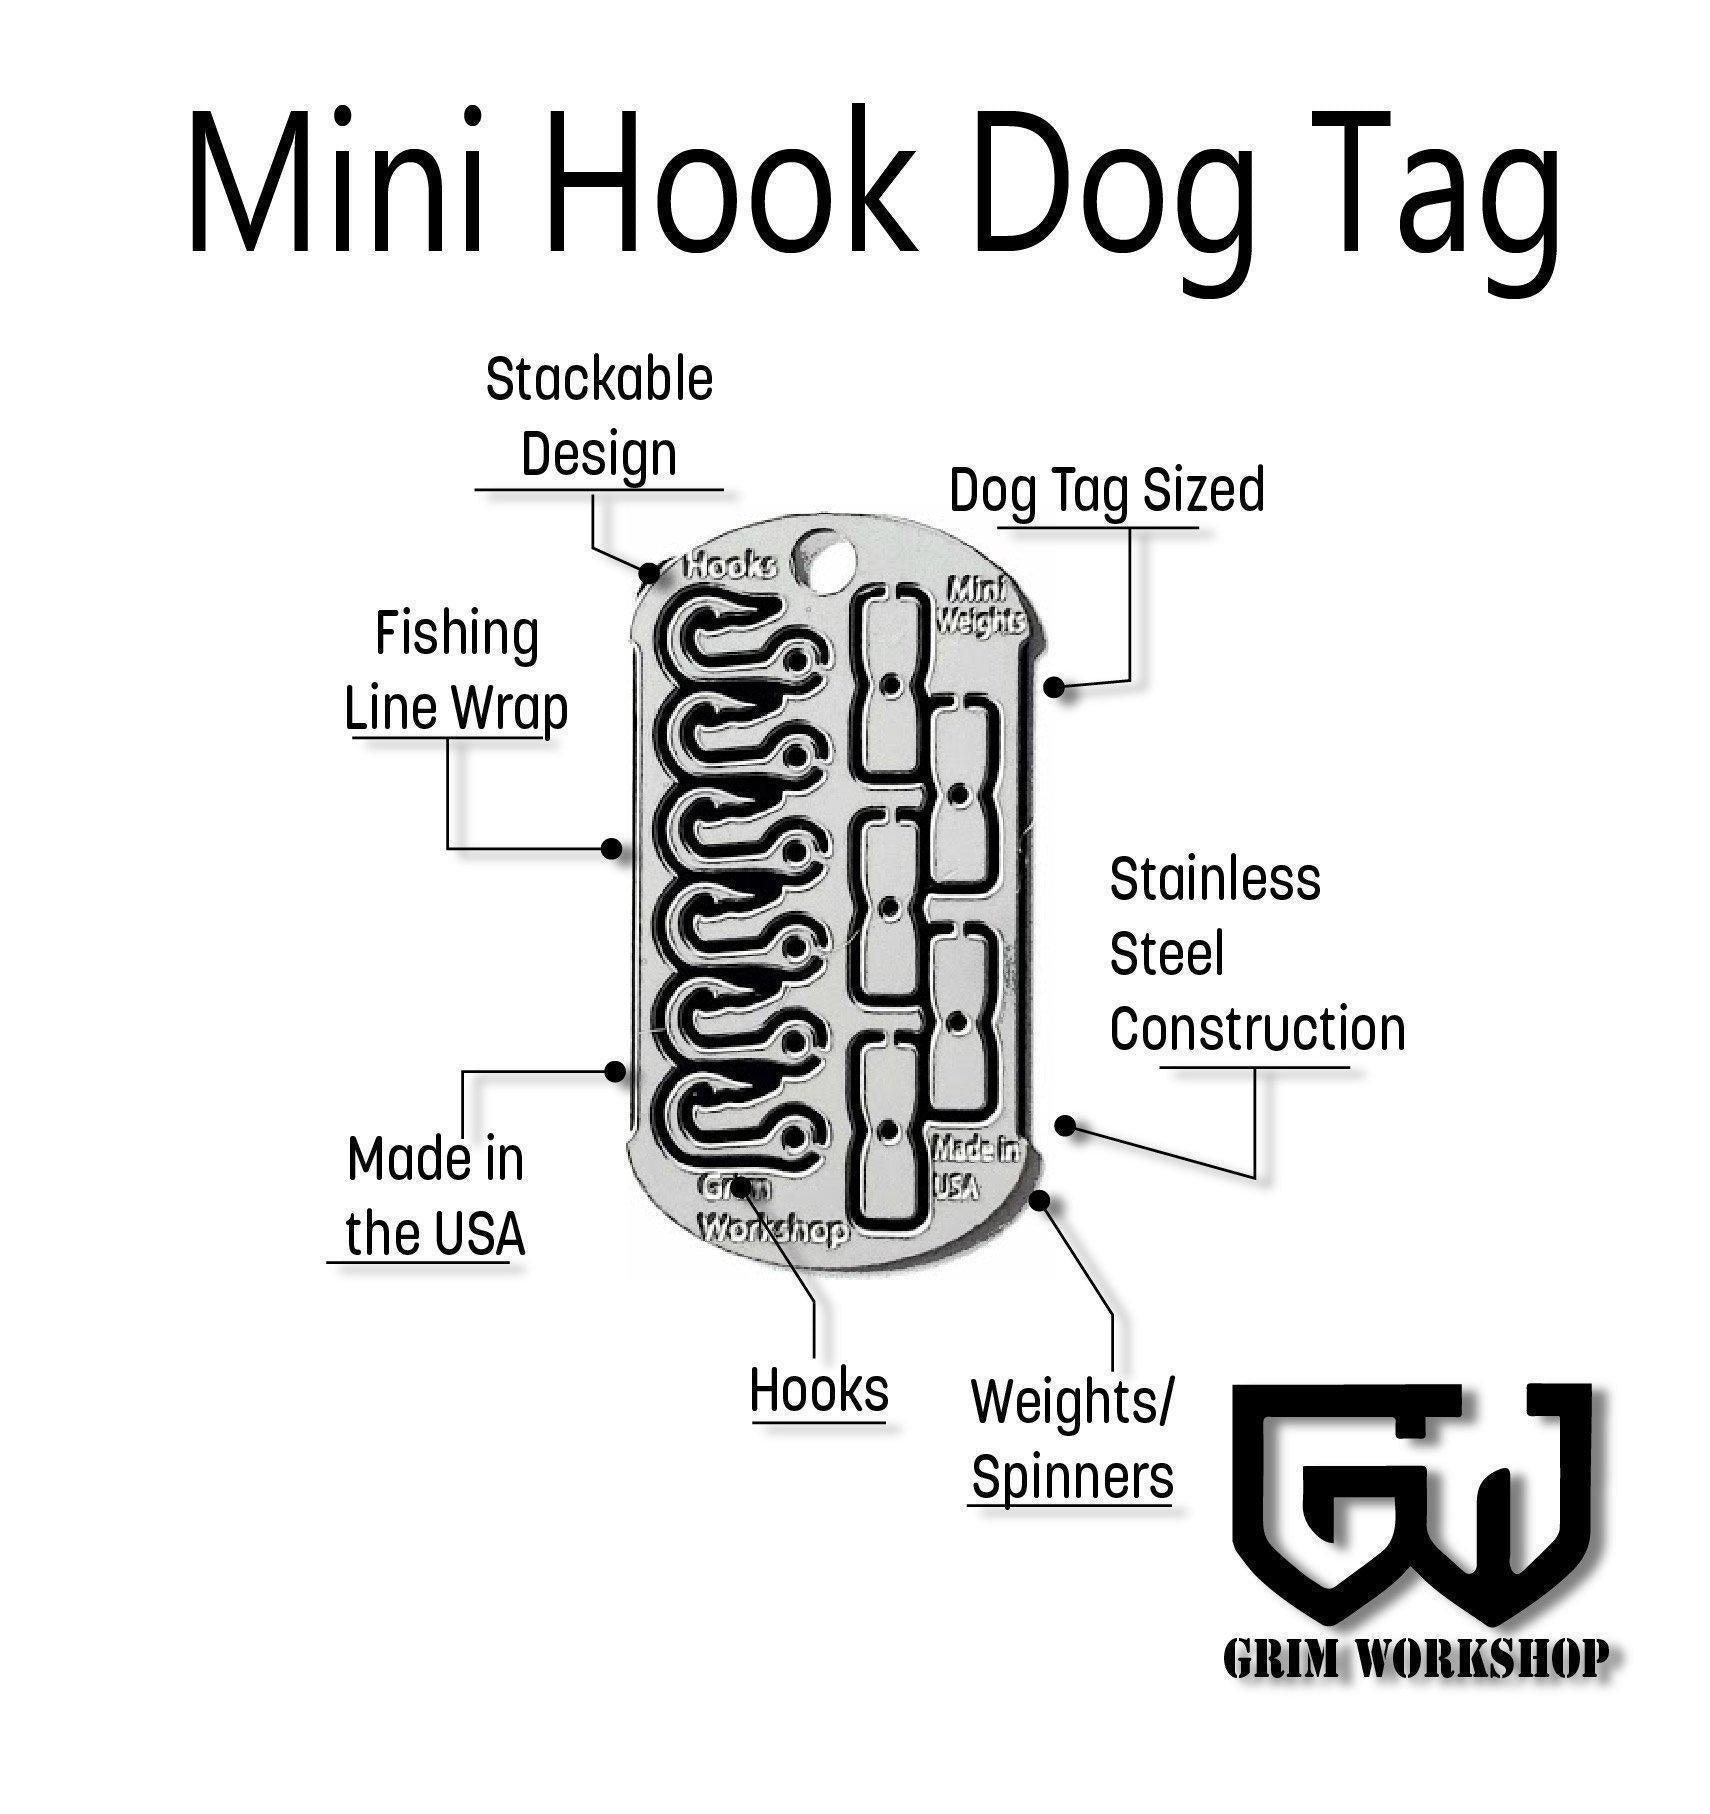 Grim Workshop Mini Hook Dog Tag